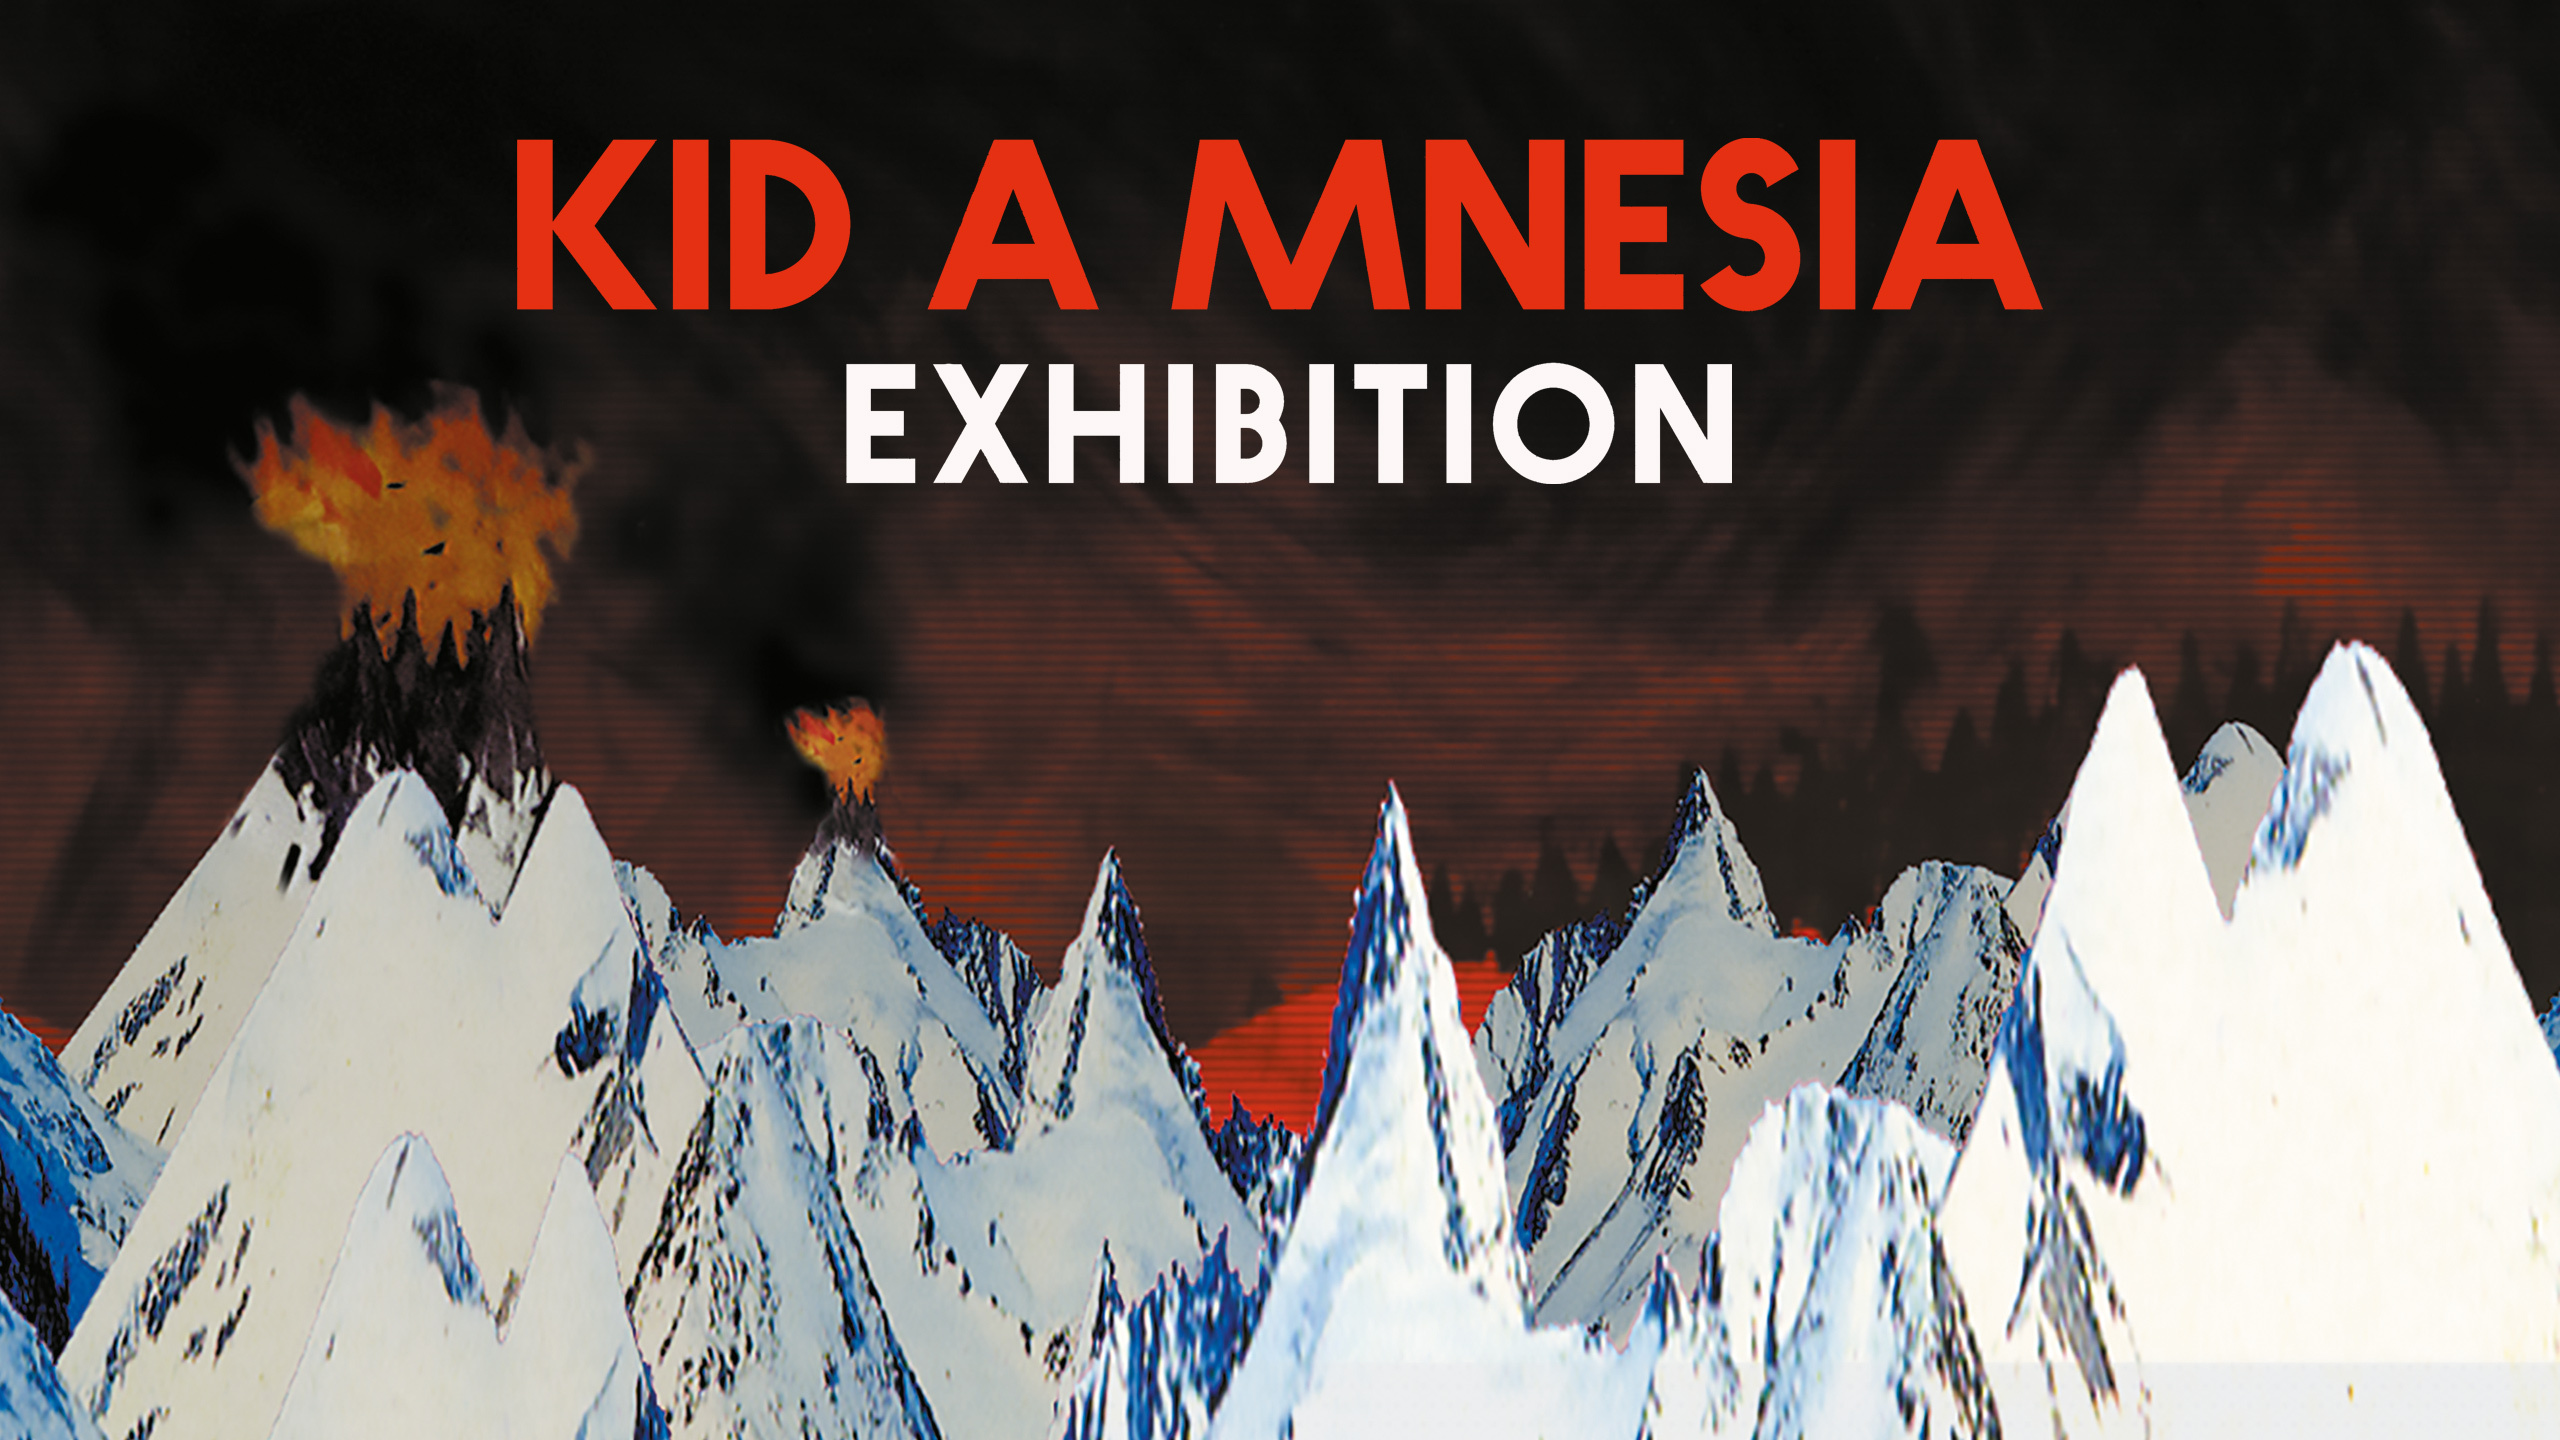 kid a mnesia exhibition vr